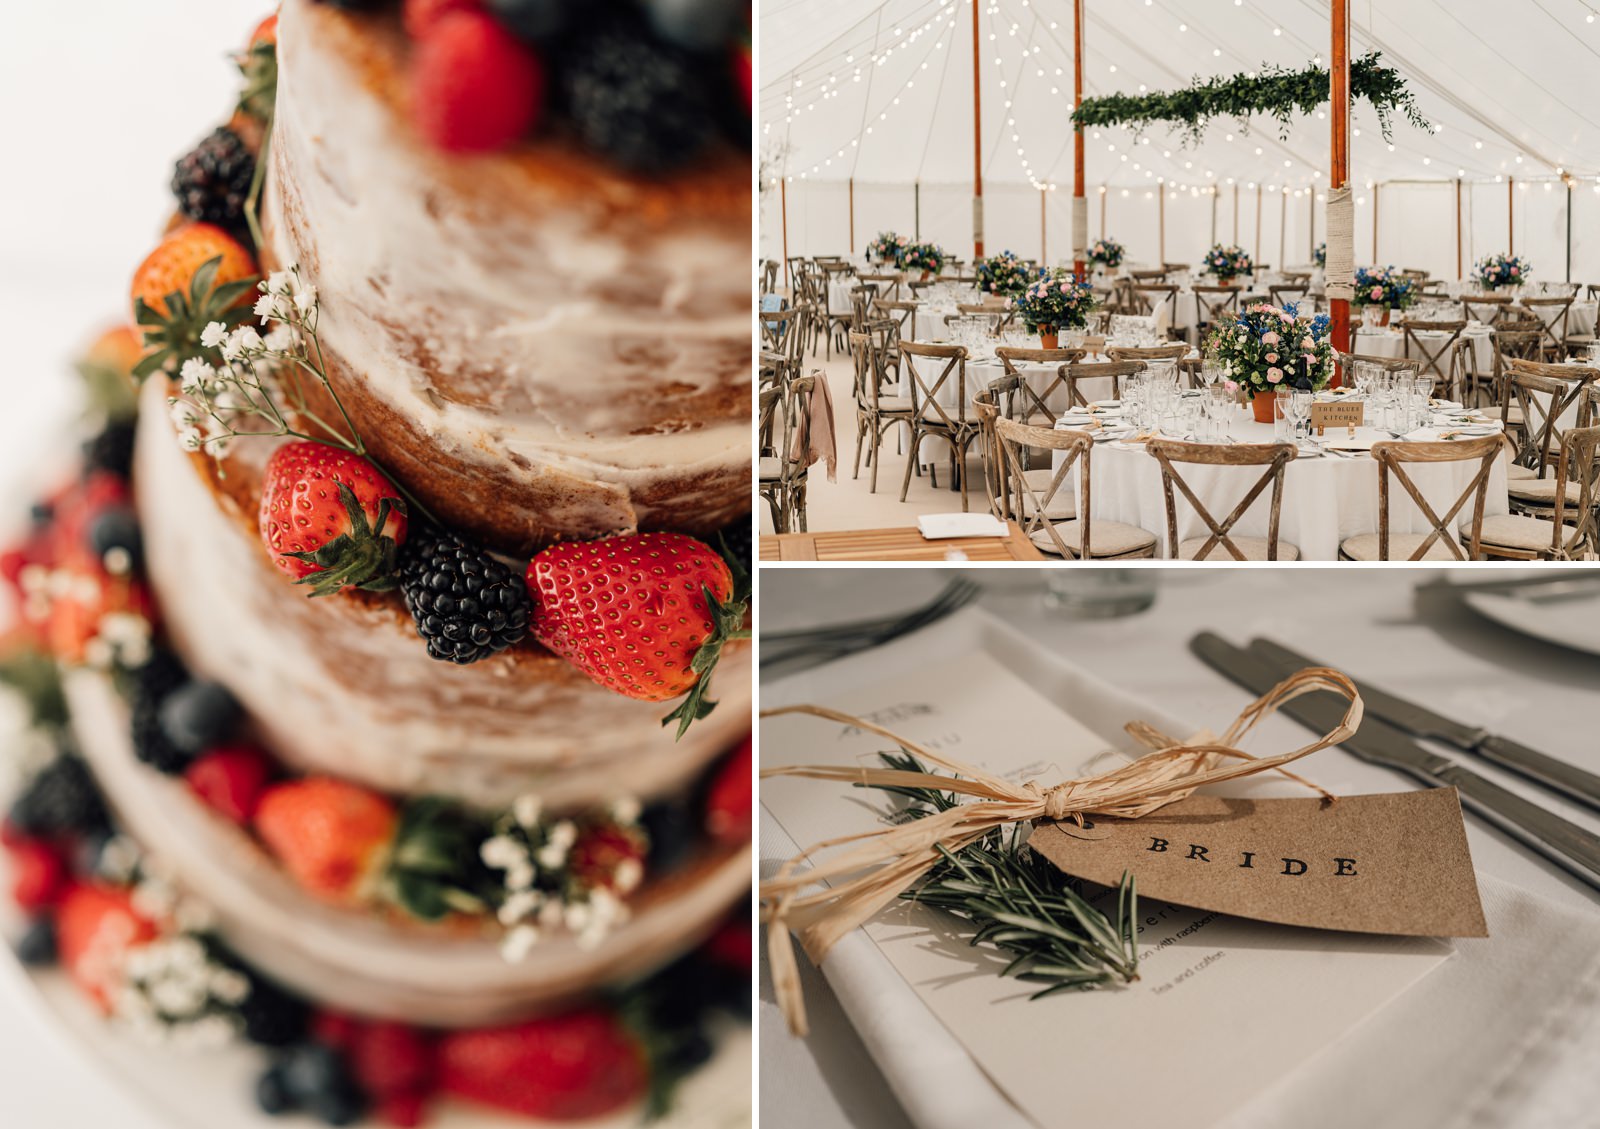 Wedding cake and decorations